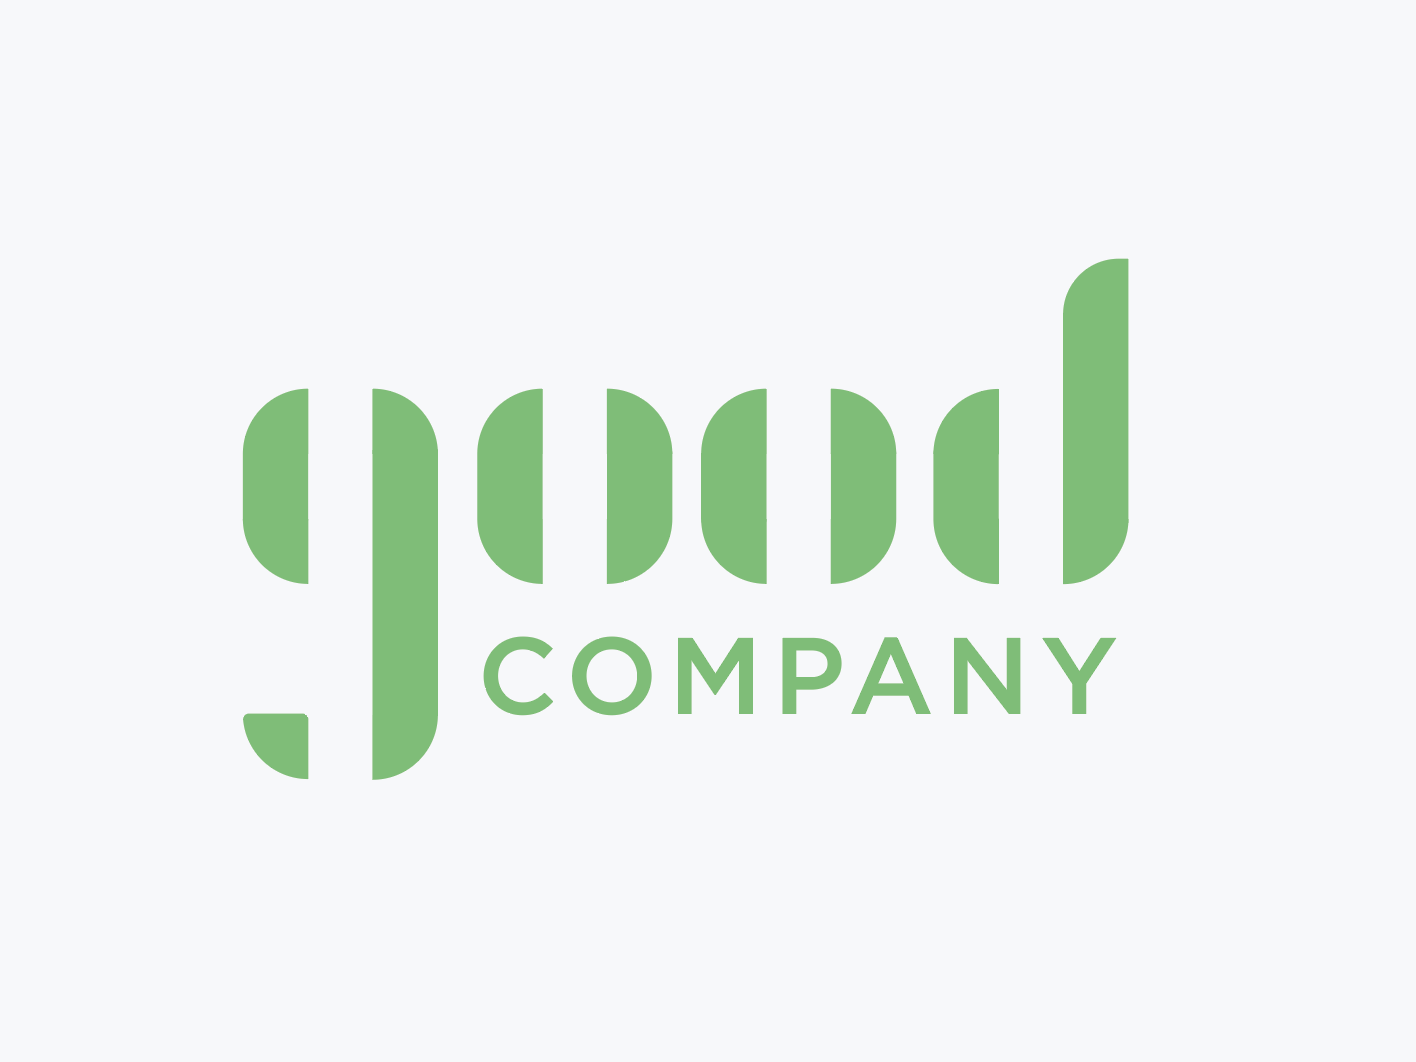 Haley Logo - Good Company Logo by Haley Stephenson on Dribbble